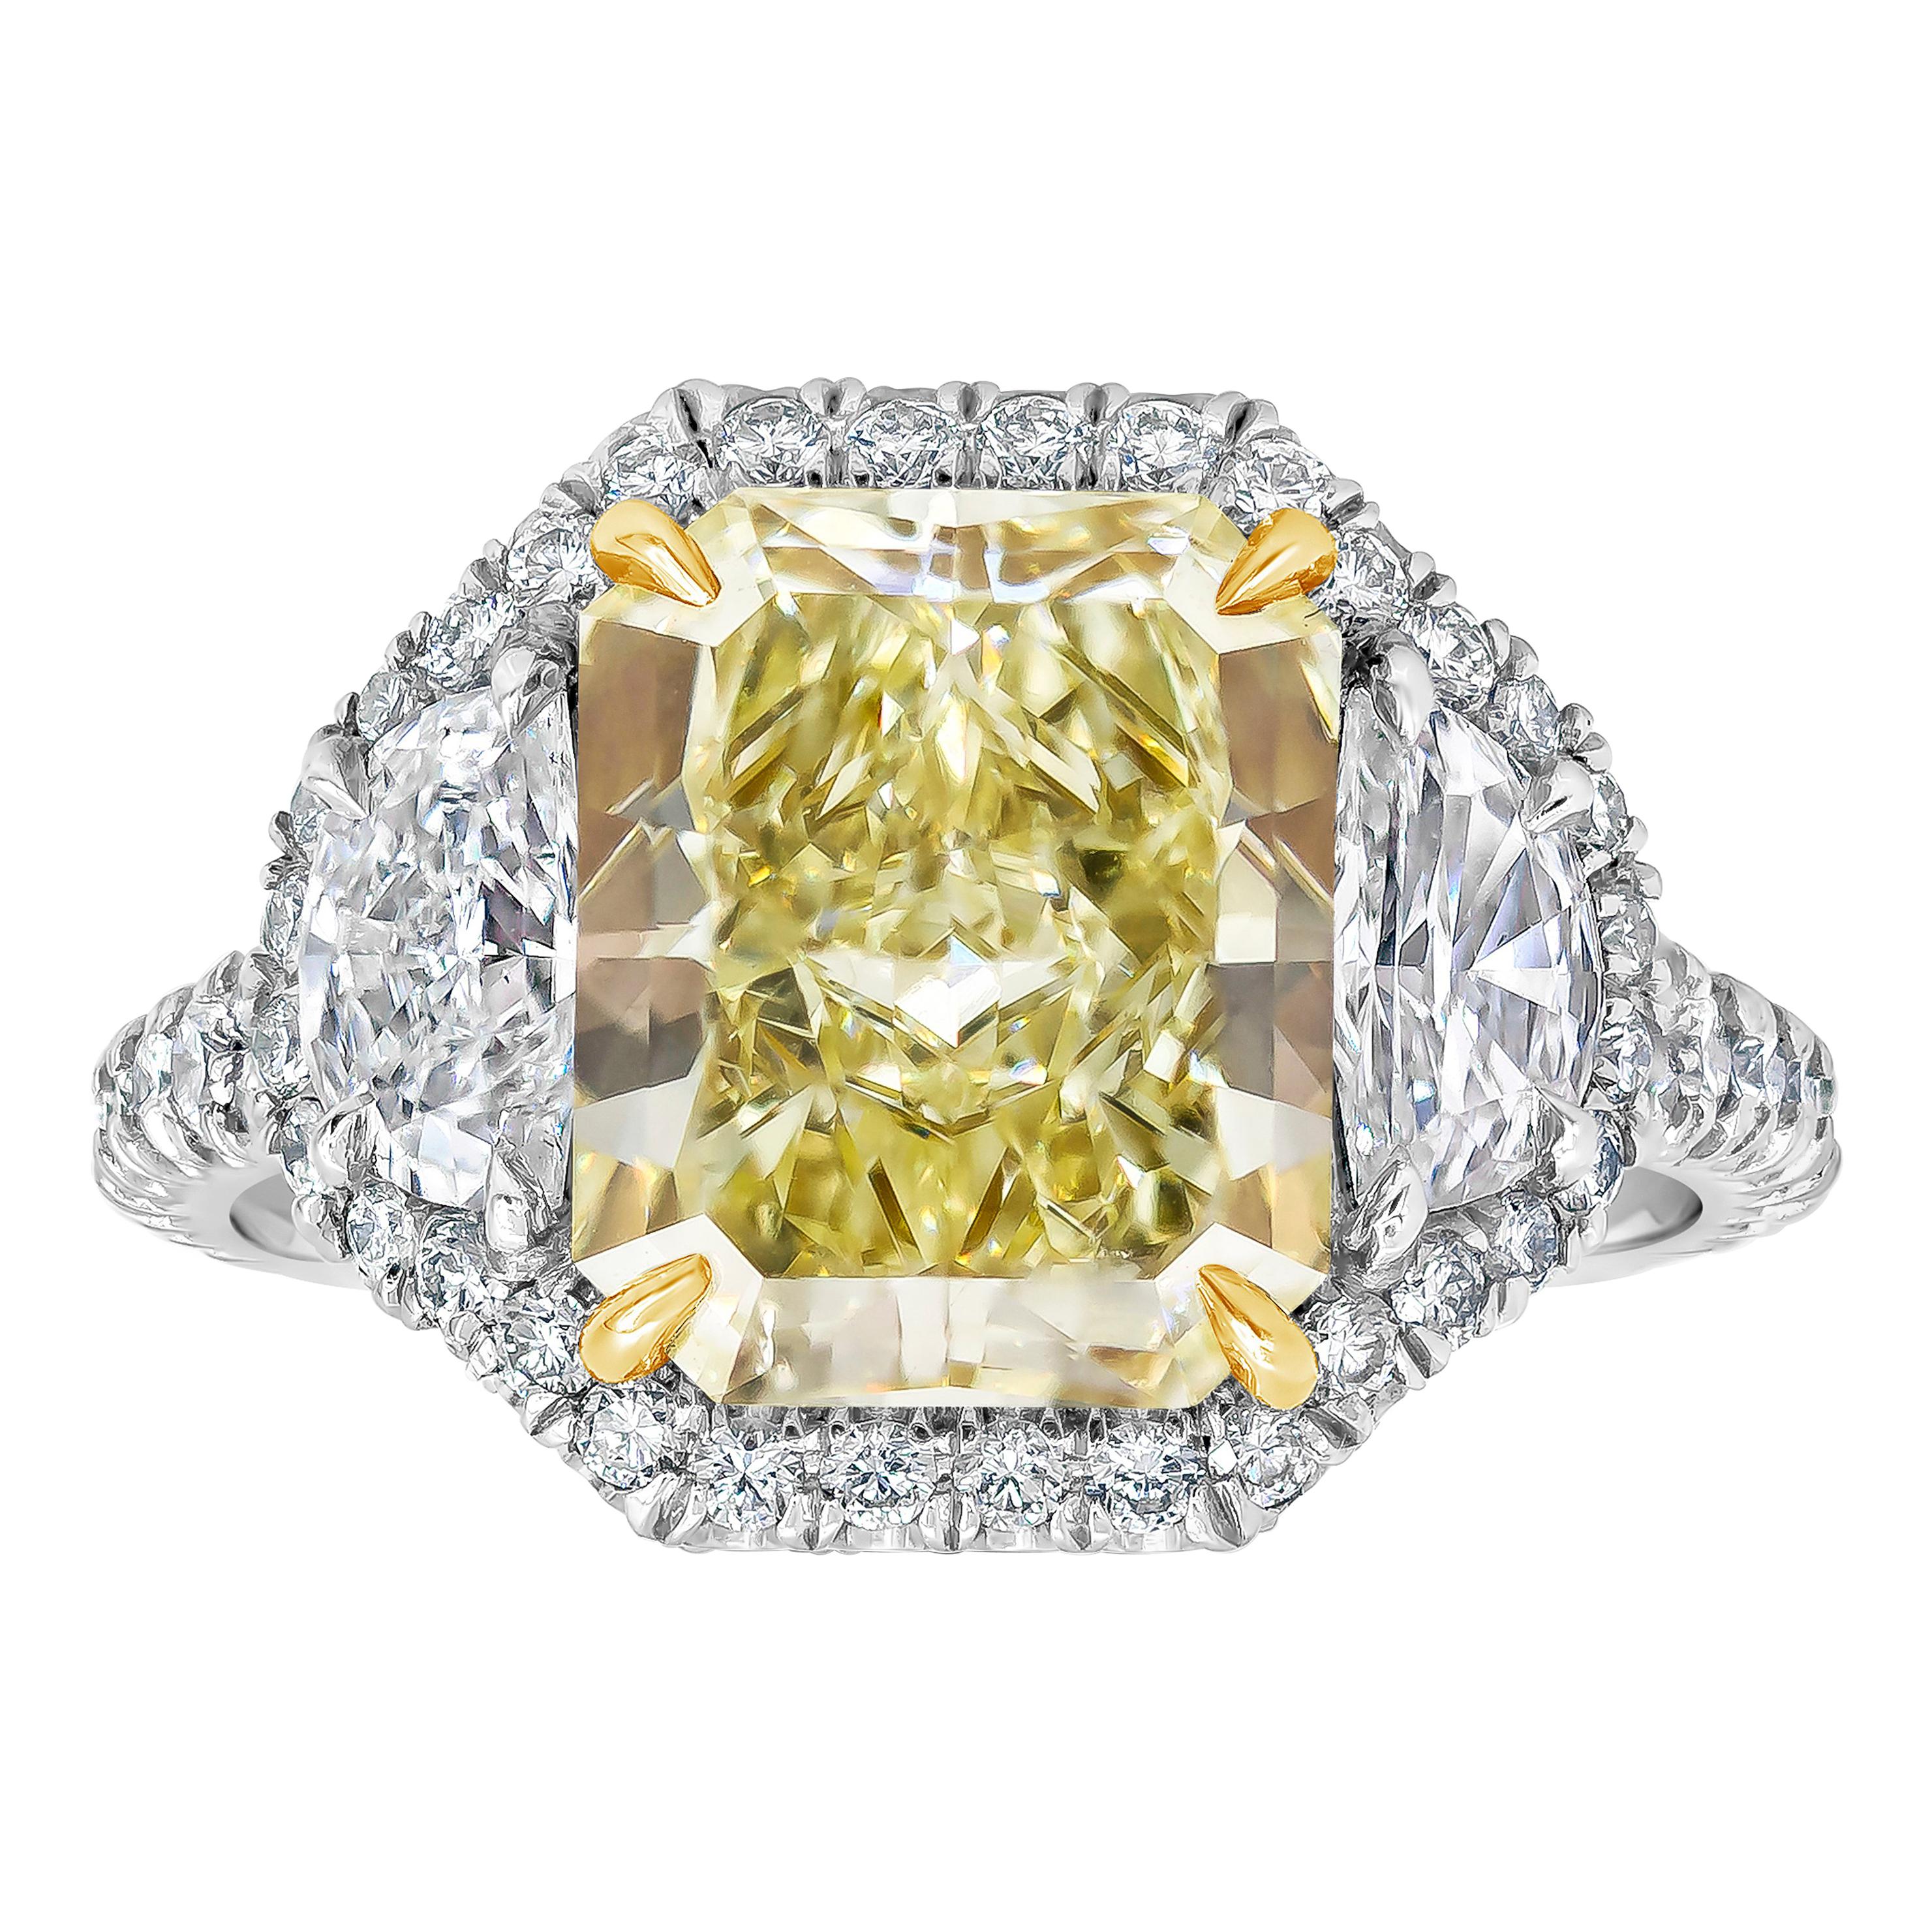 3.64 Carats Total Radiant Cut Yellow Diamond Halo Three-Stone Engagement Ring